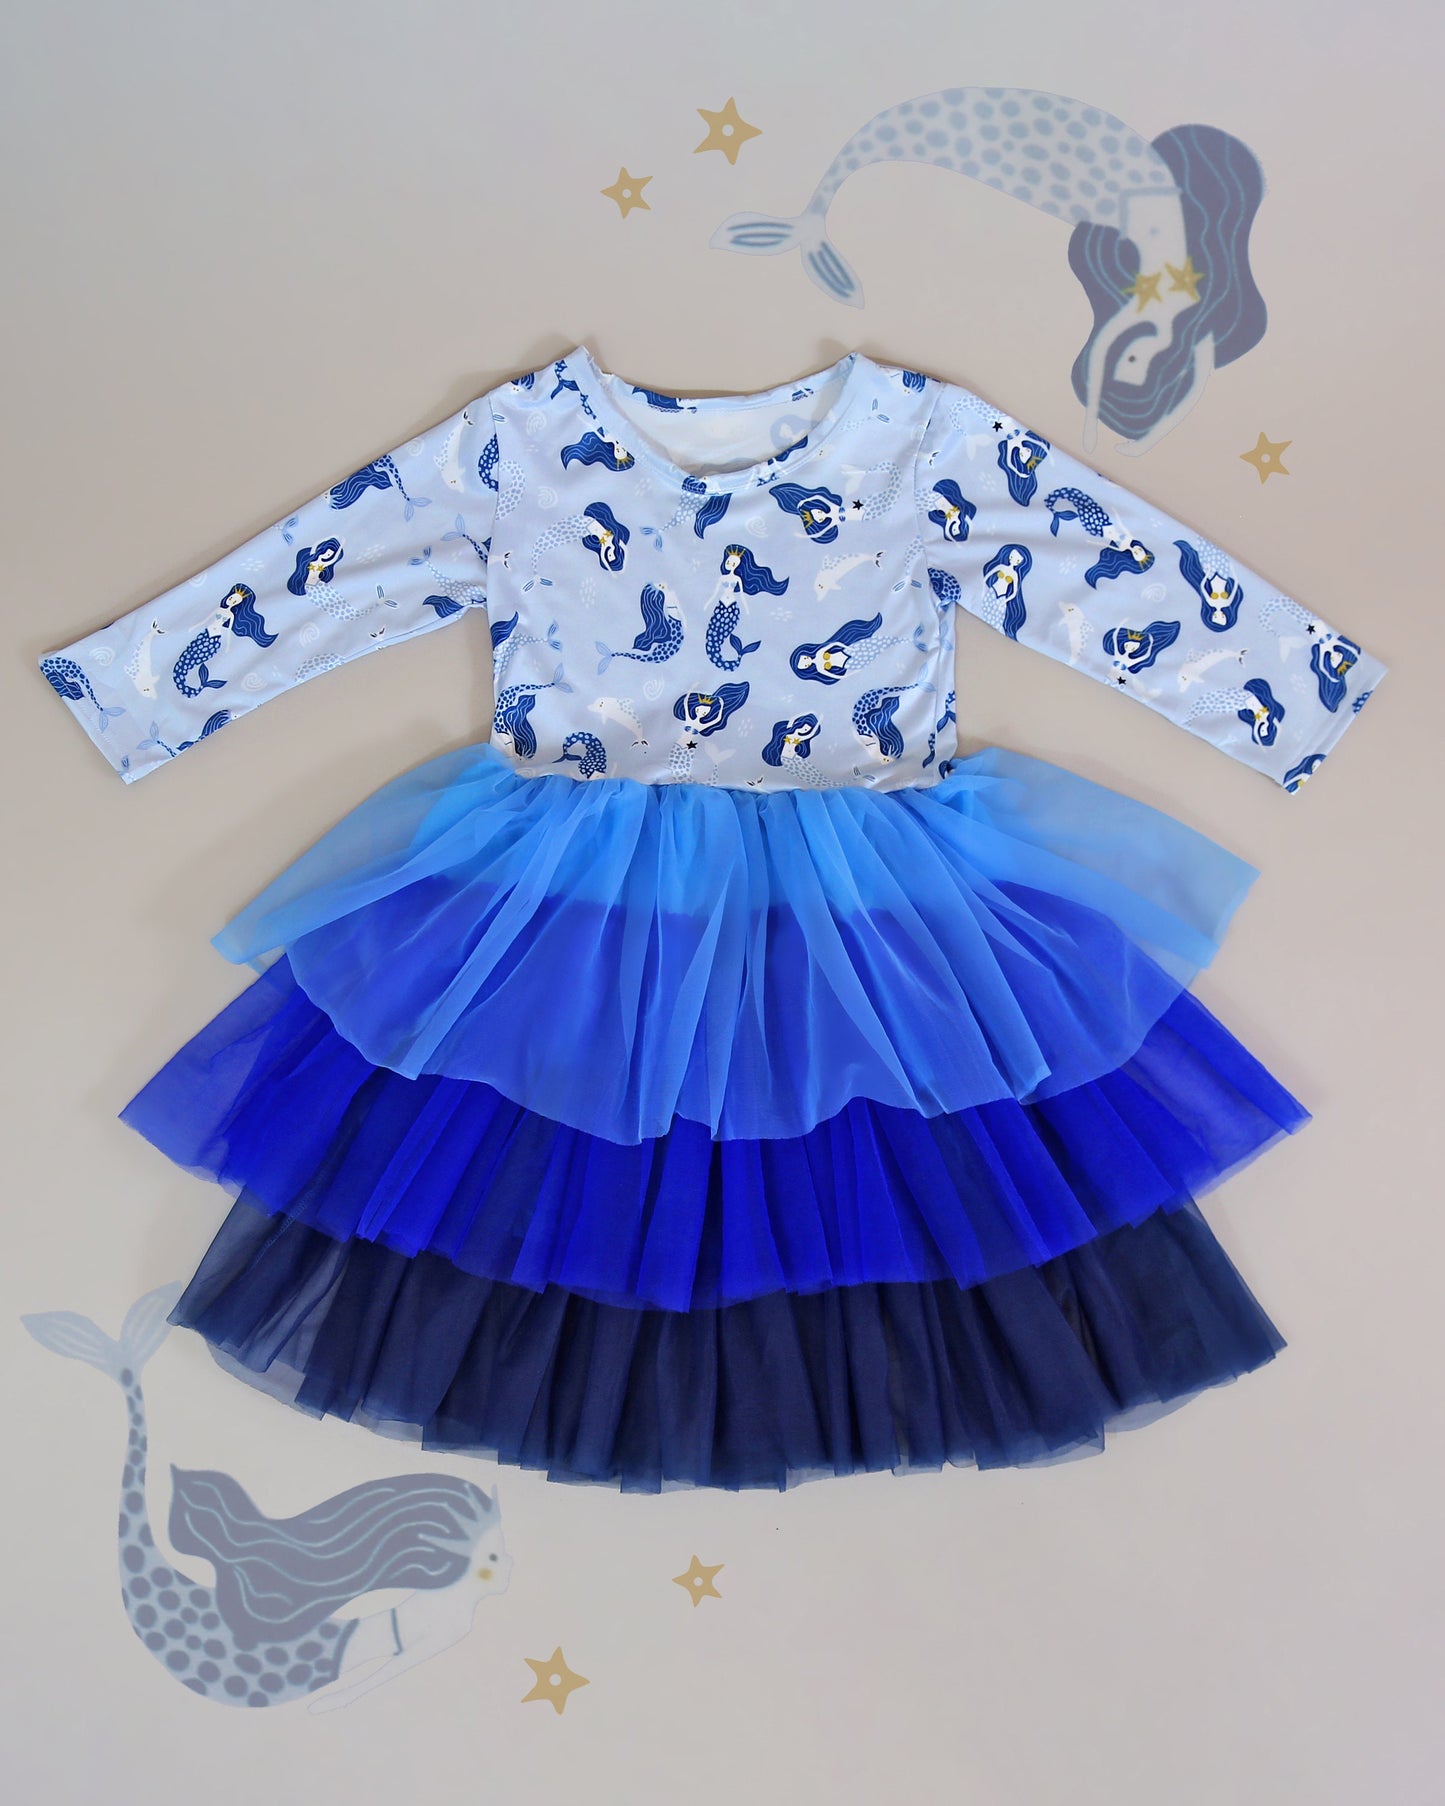 3/4 Sleeve Tutu Dress in Blue Mermaid